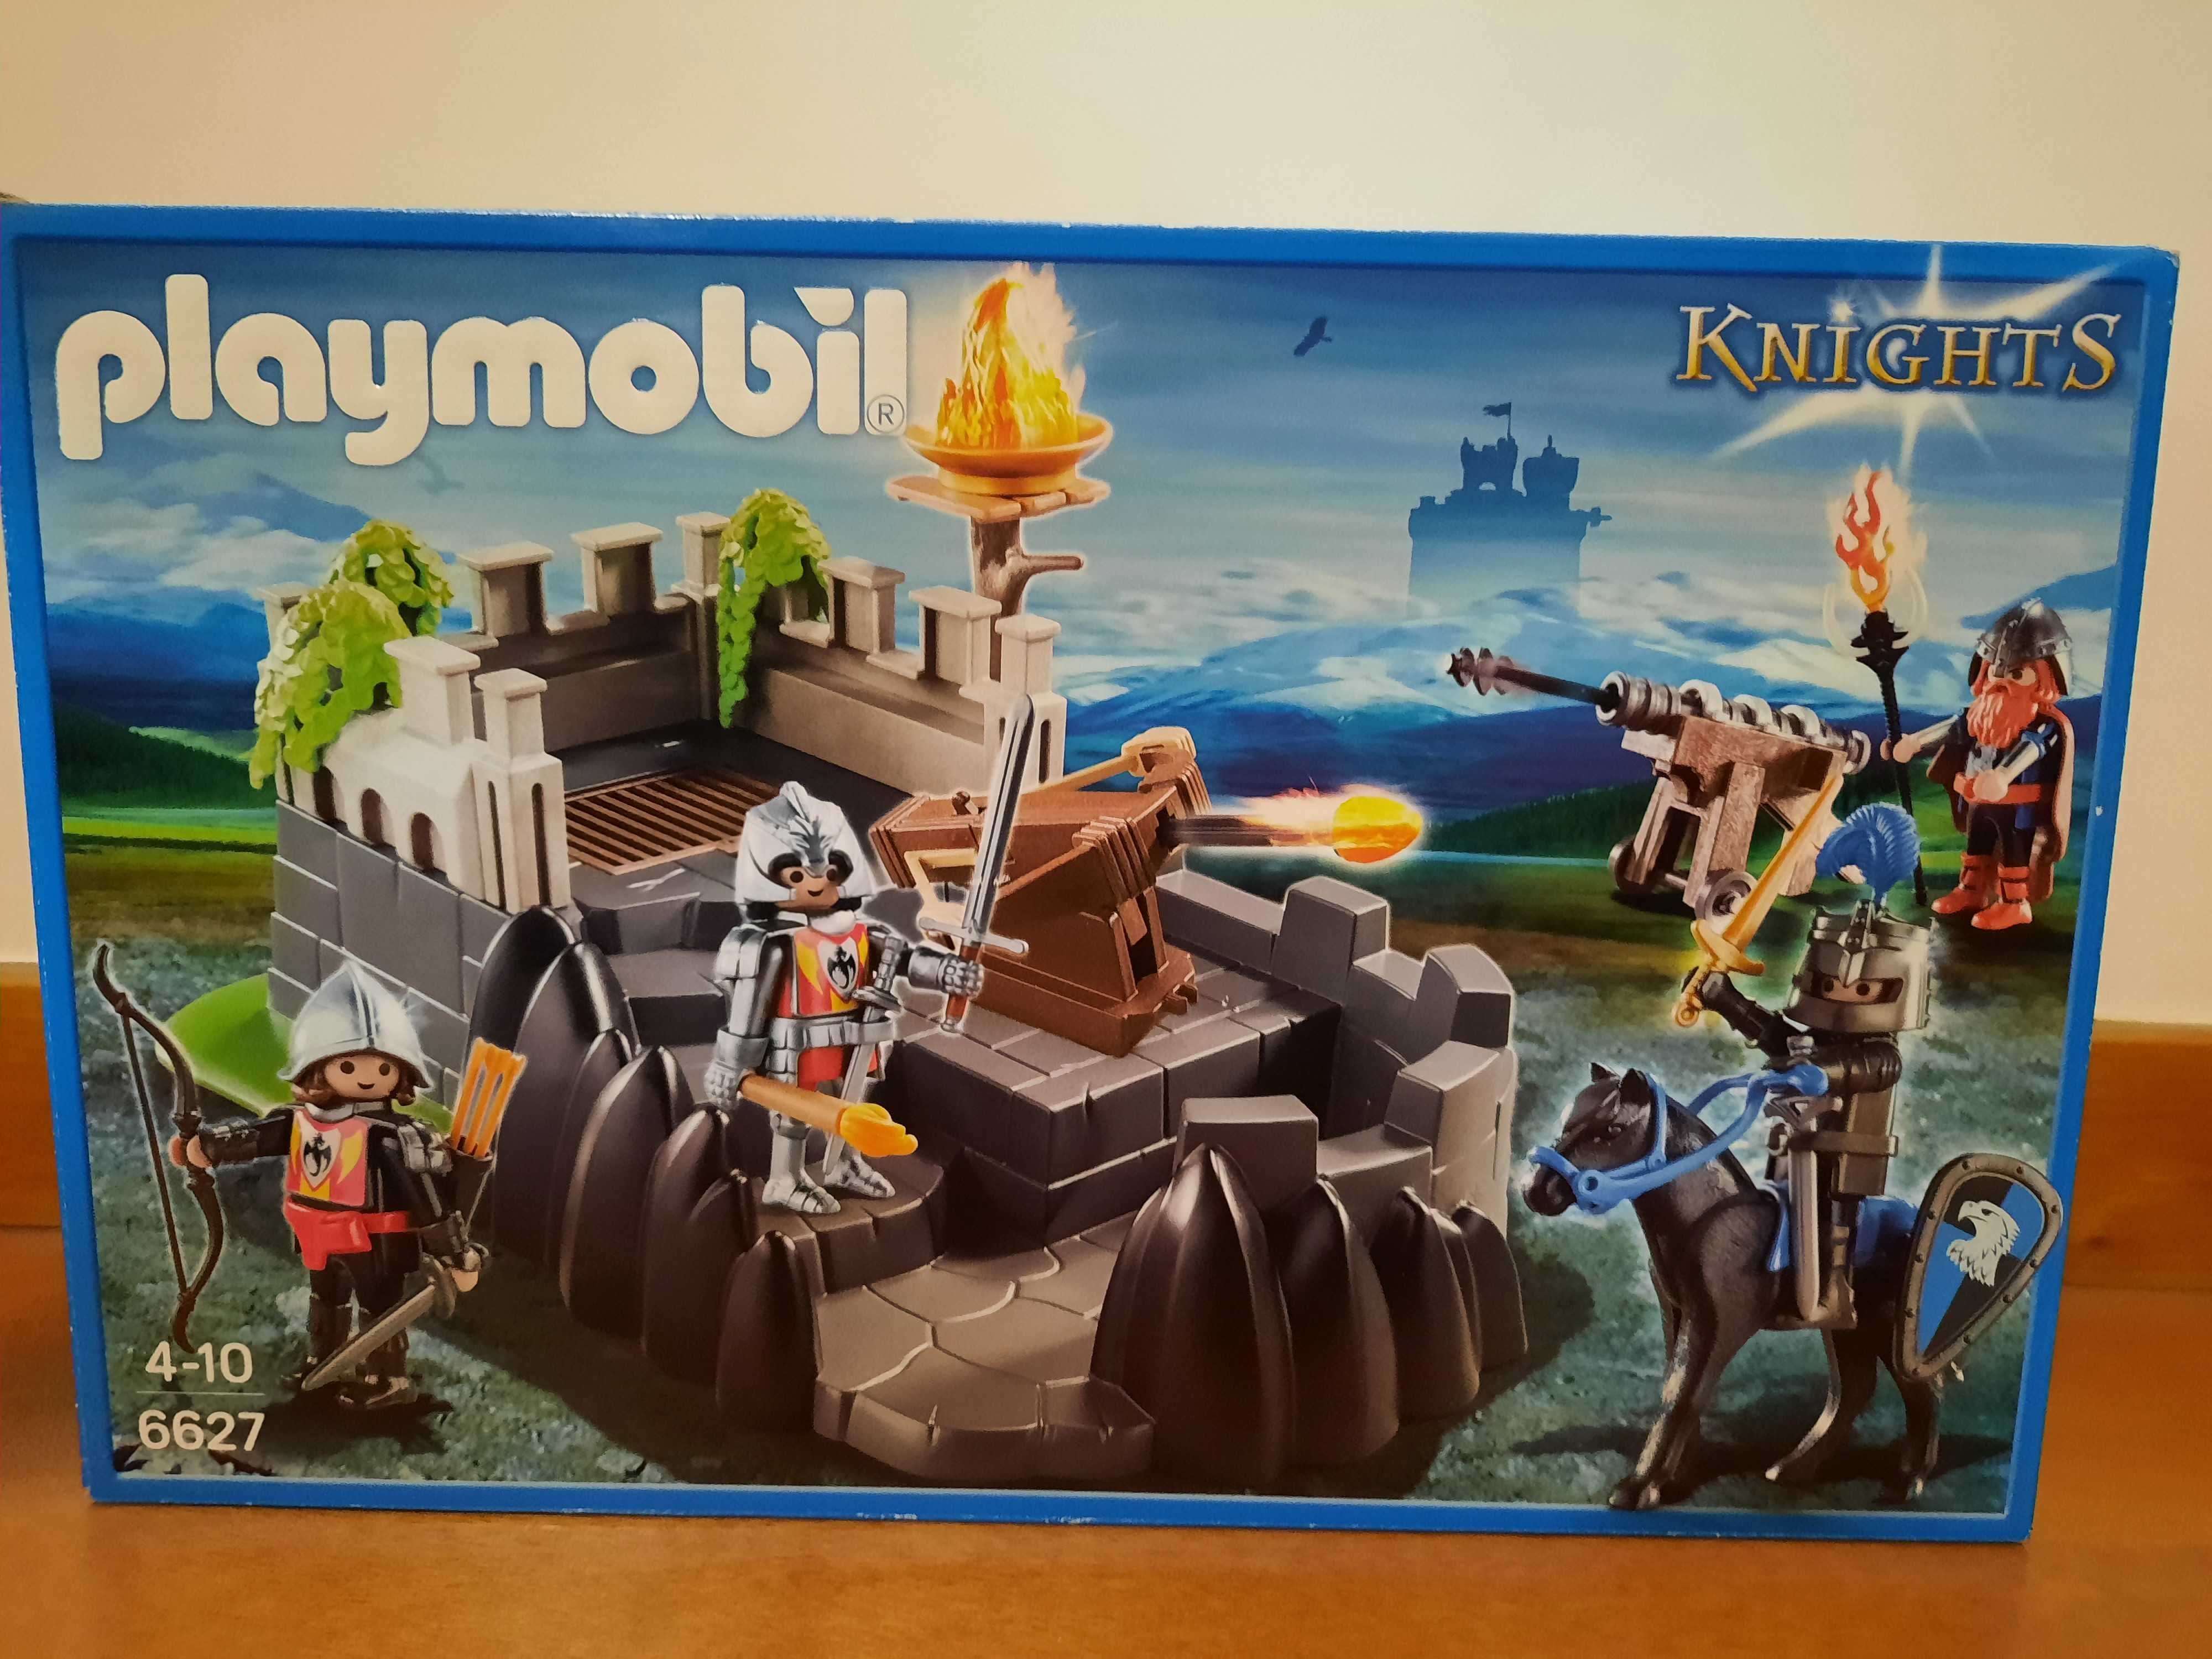 Playmobil Knights 6627